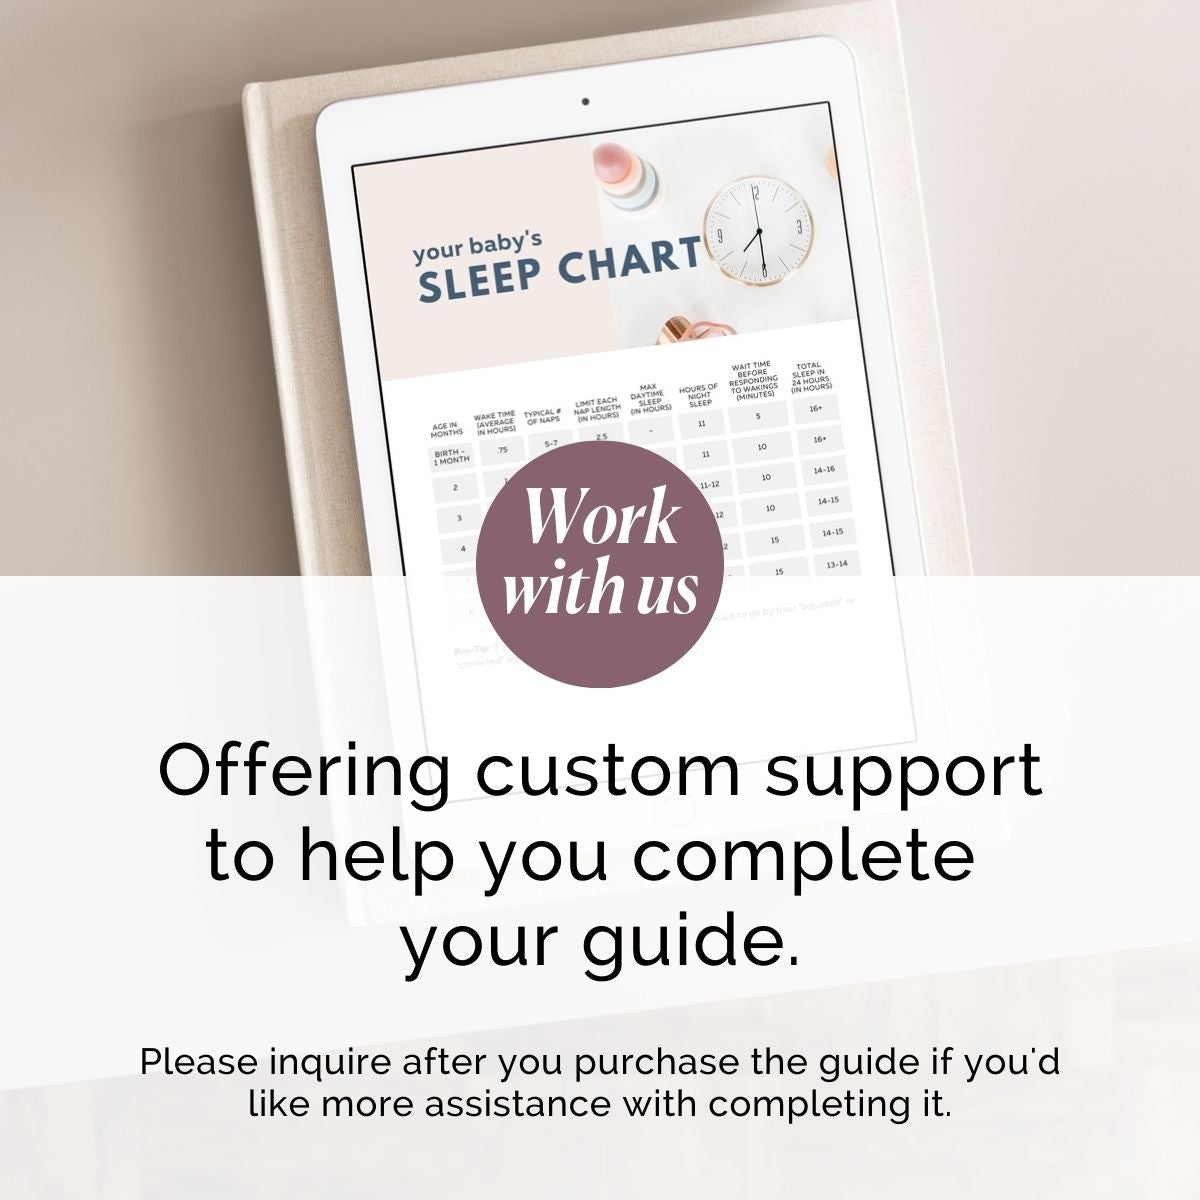 Newborn Sleep Guide Template